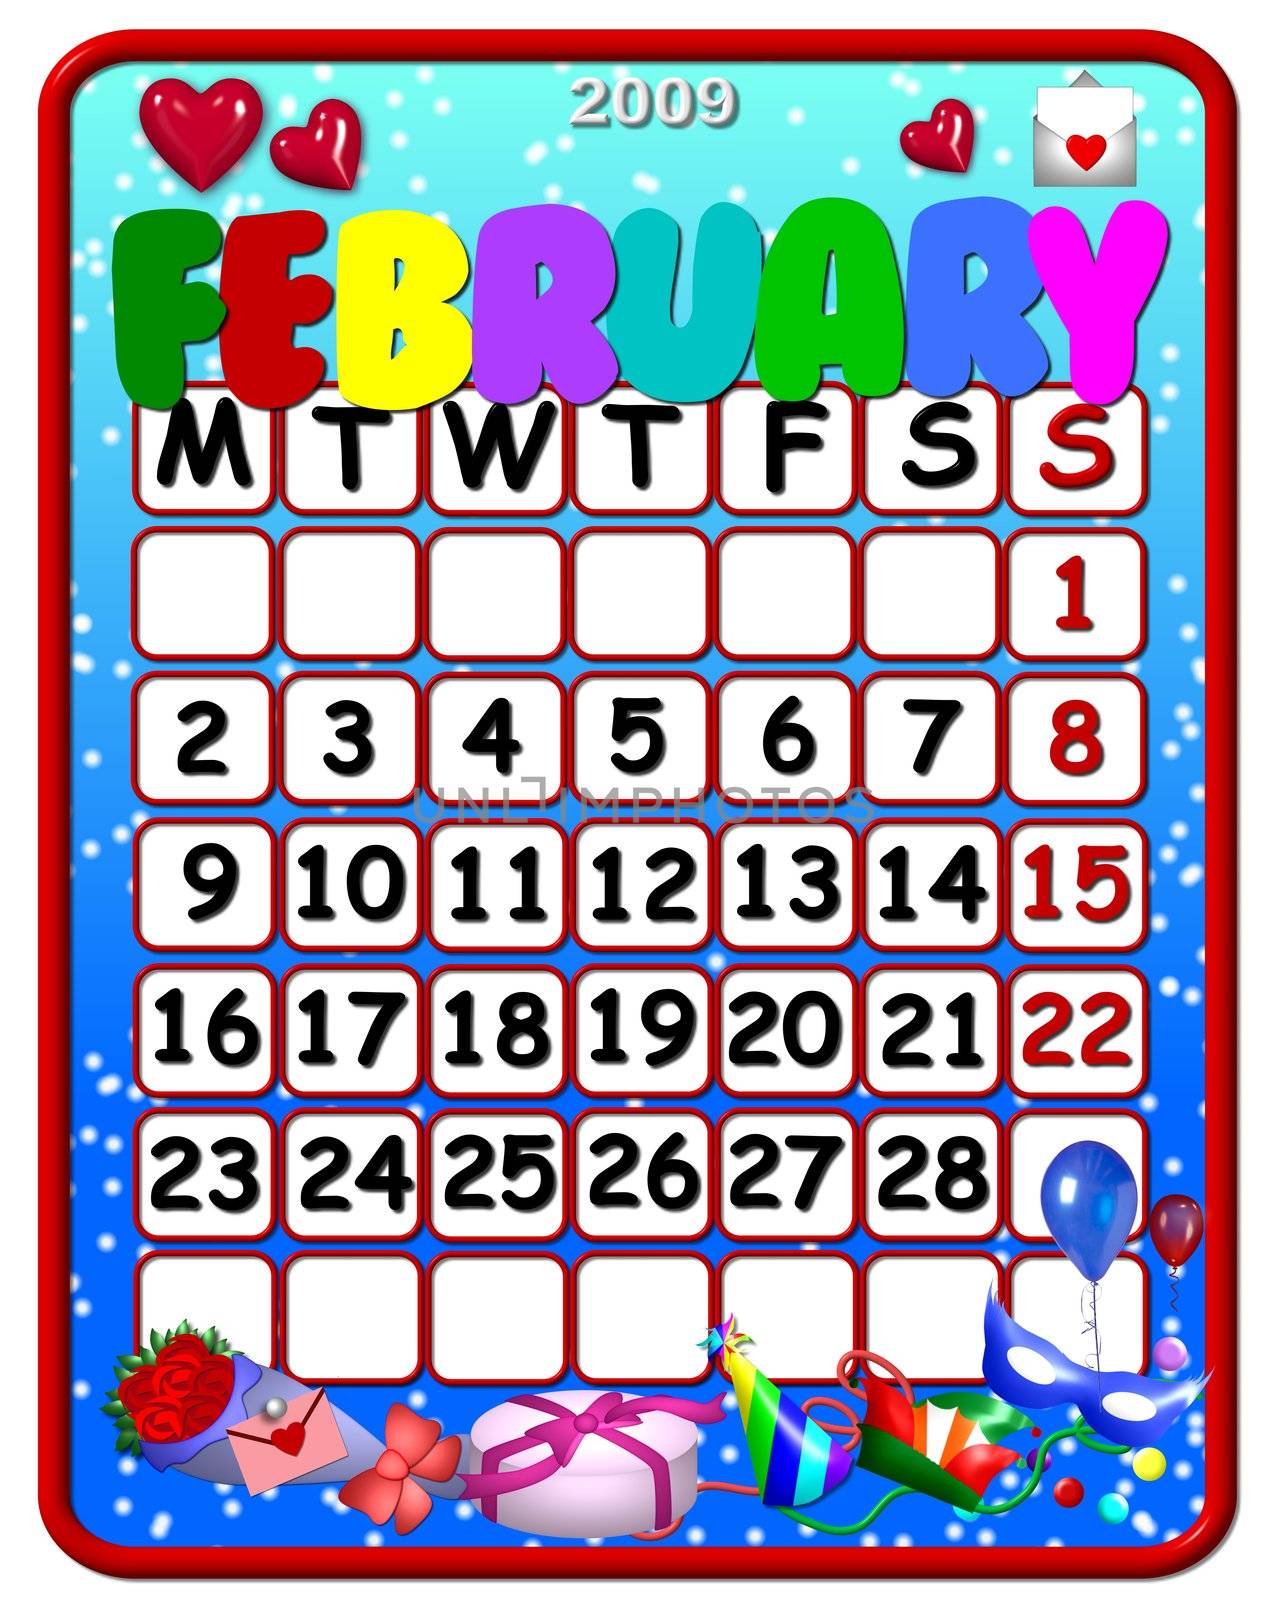 funny calendar february 2009 by peromarketing